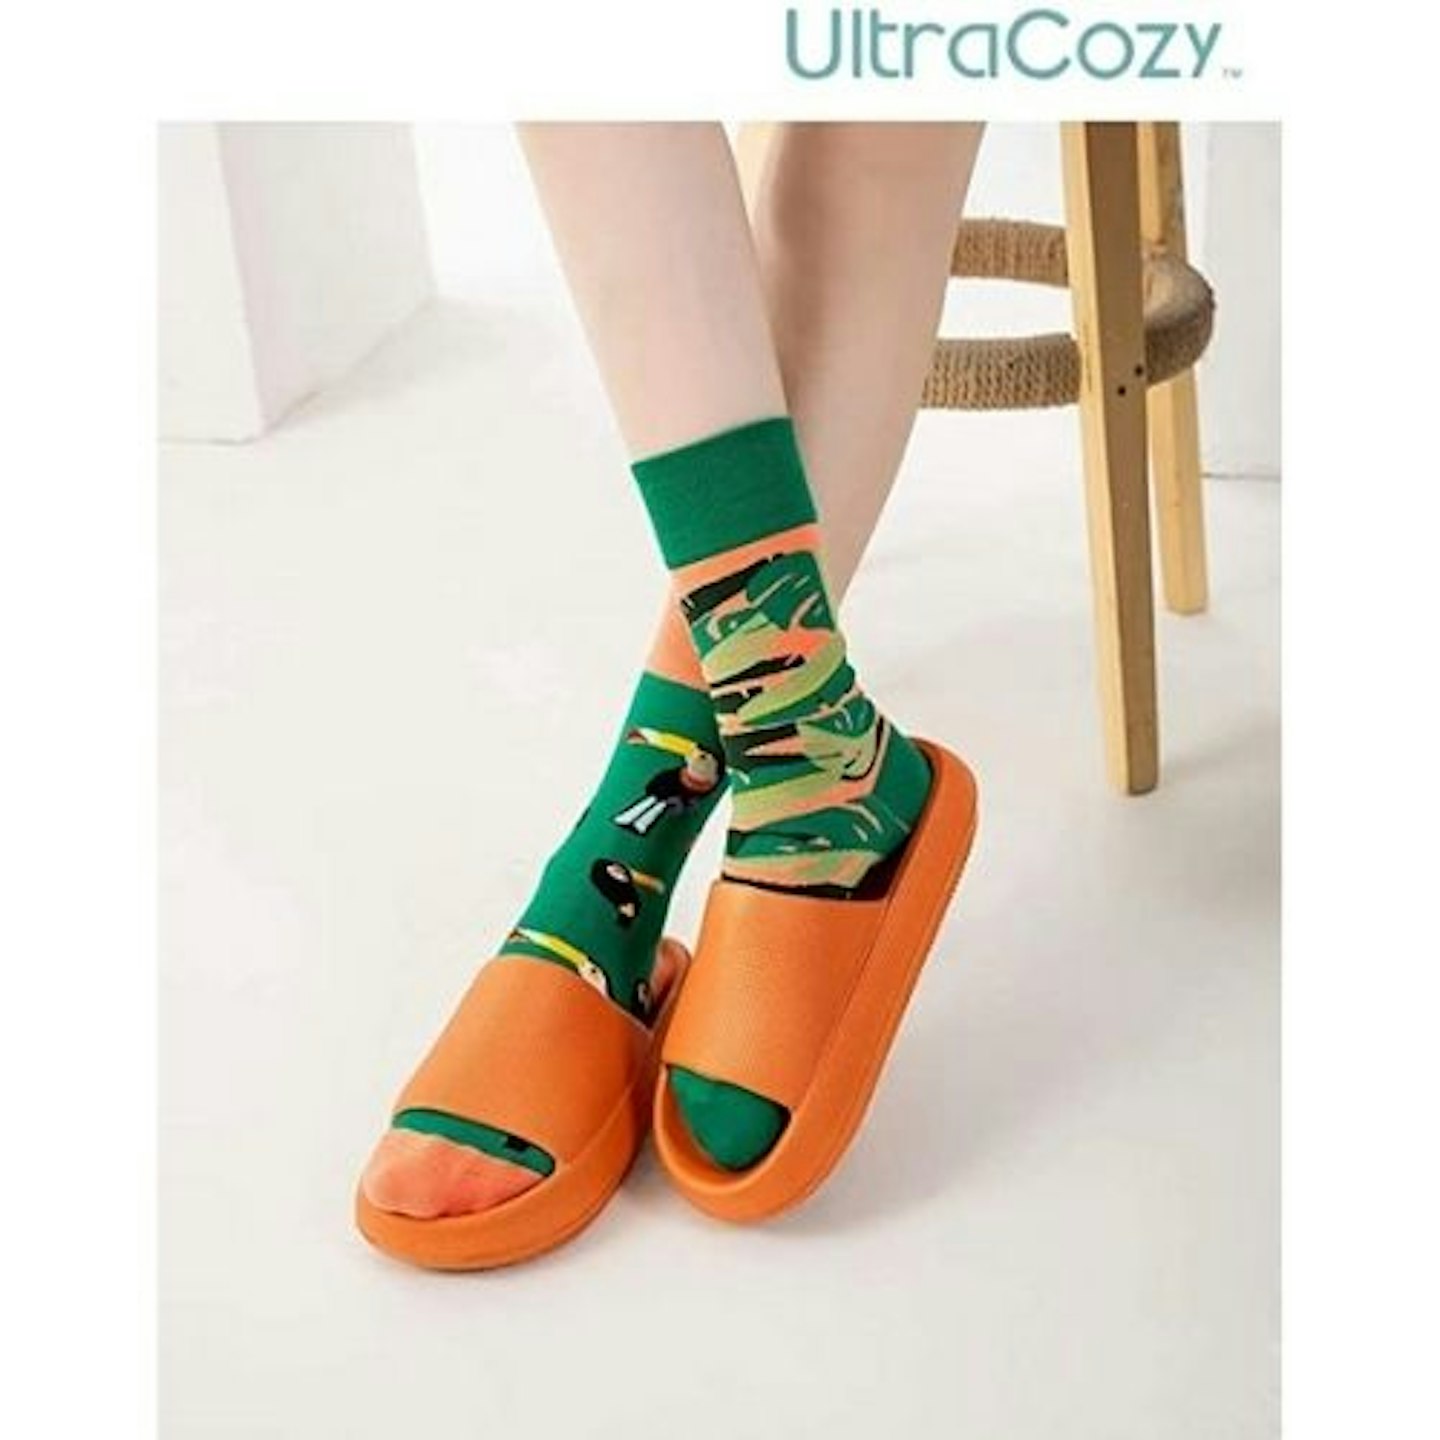 UltraCozy Unisex Shower Sandals